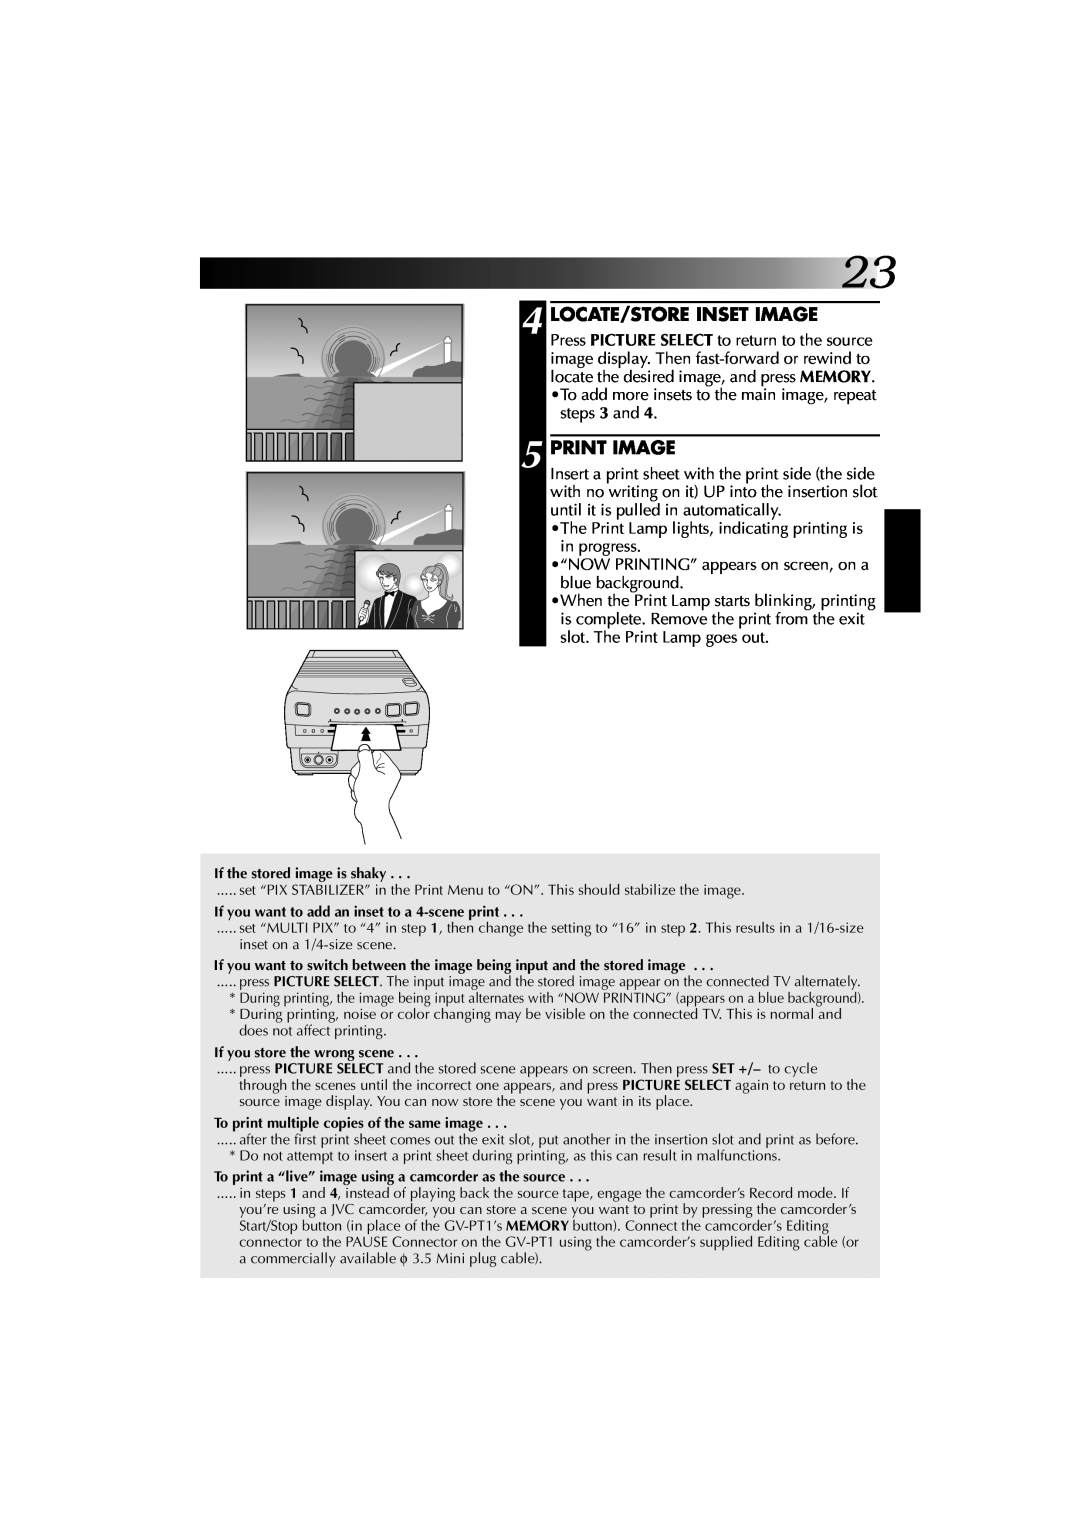 JVC GV-PT1 manual Locate/Store Inset Image, Print Image 